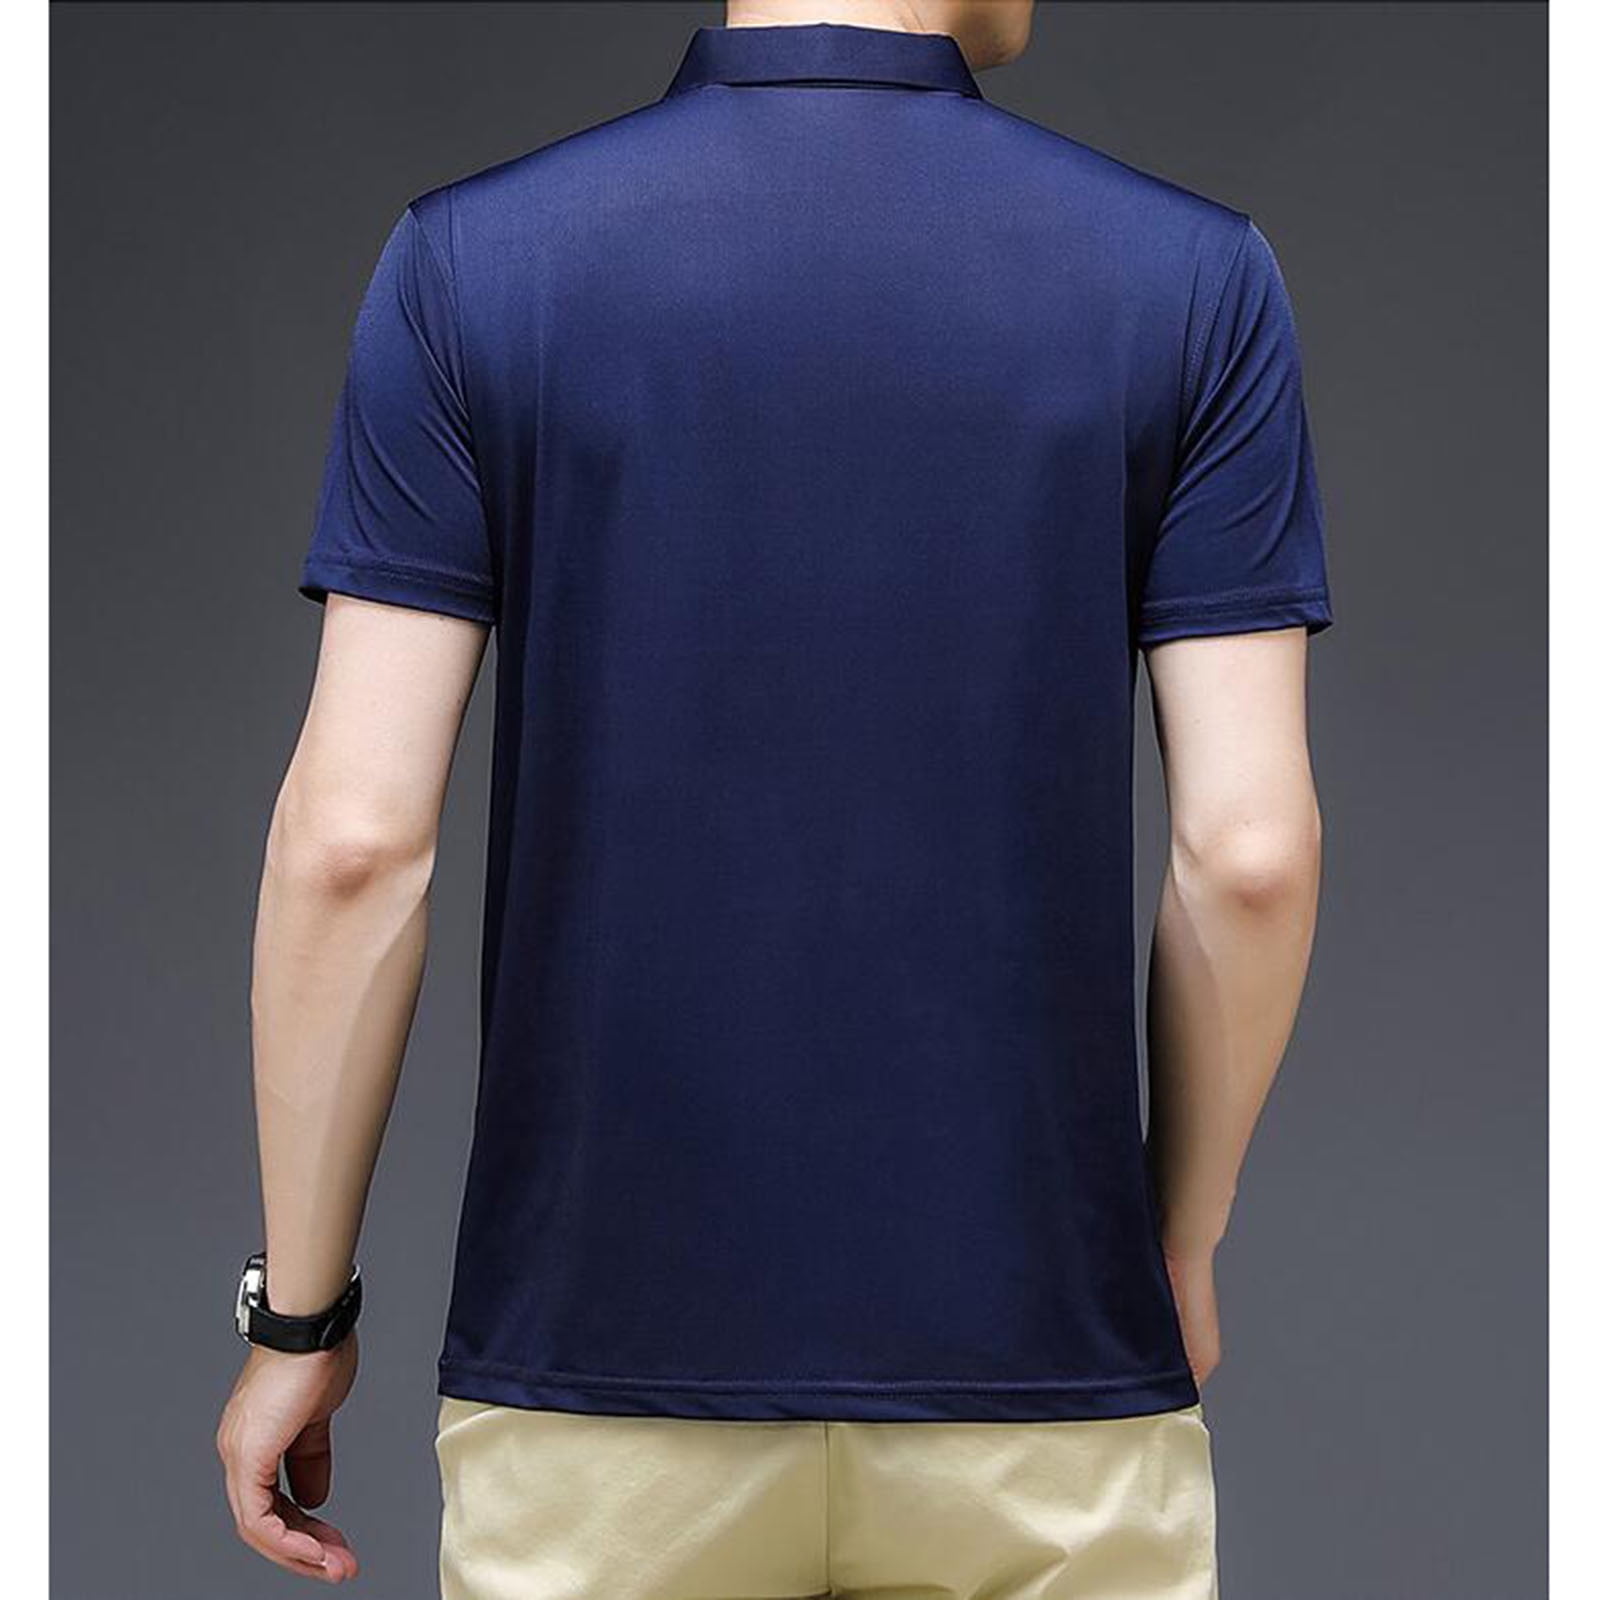 B91xZ Mens Shirts Casual Stylish Men's Short Sleeve Plaid Shirts